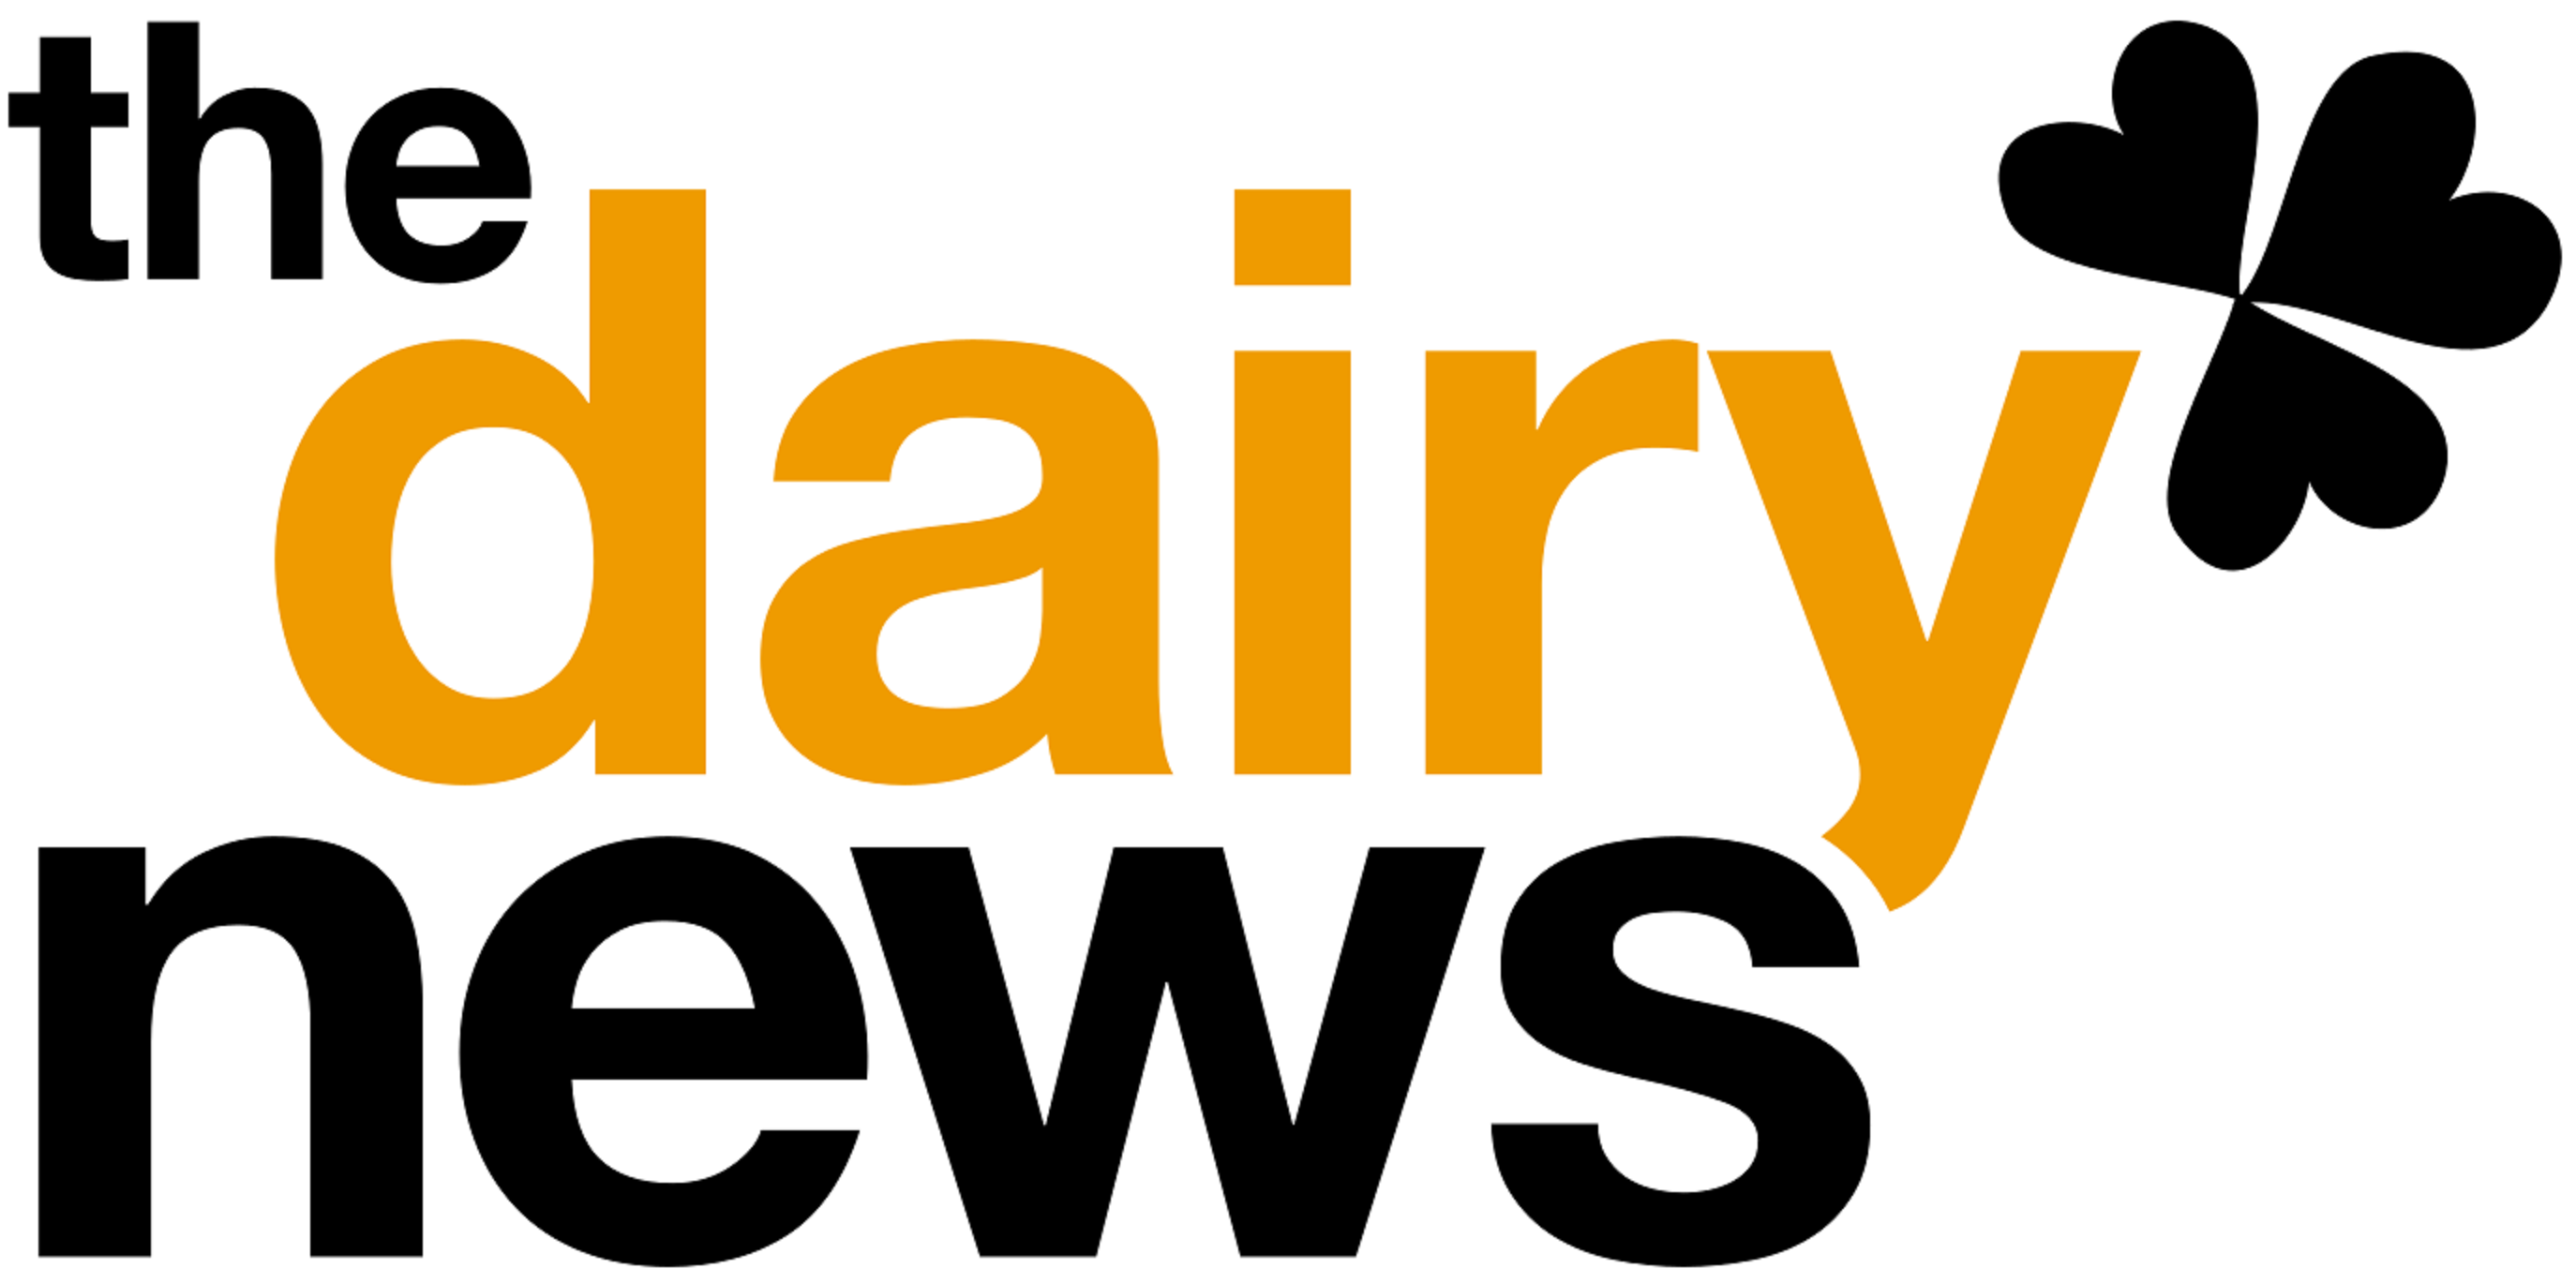 Дейри ньюс молочный. DAIRYNEWS. The DAIRYNEWS лого. Dairy News. Dairy News logo.